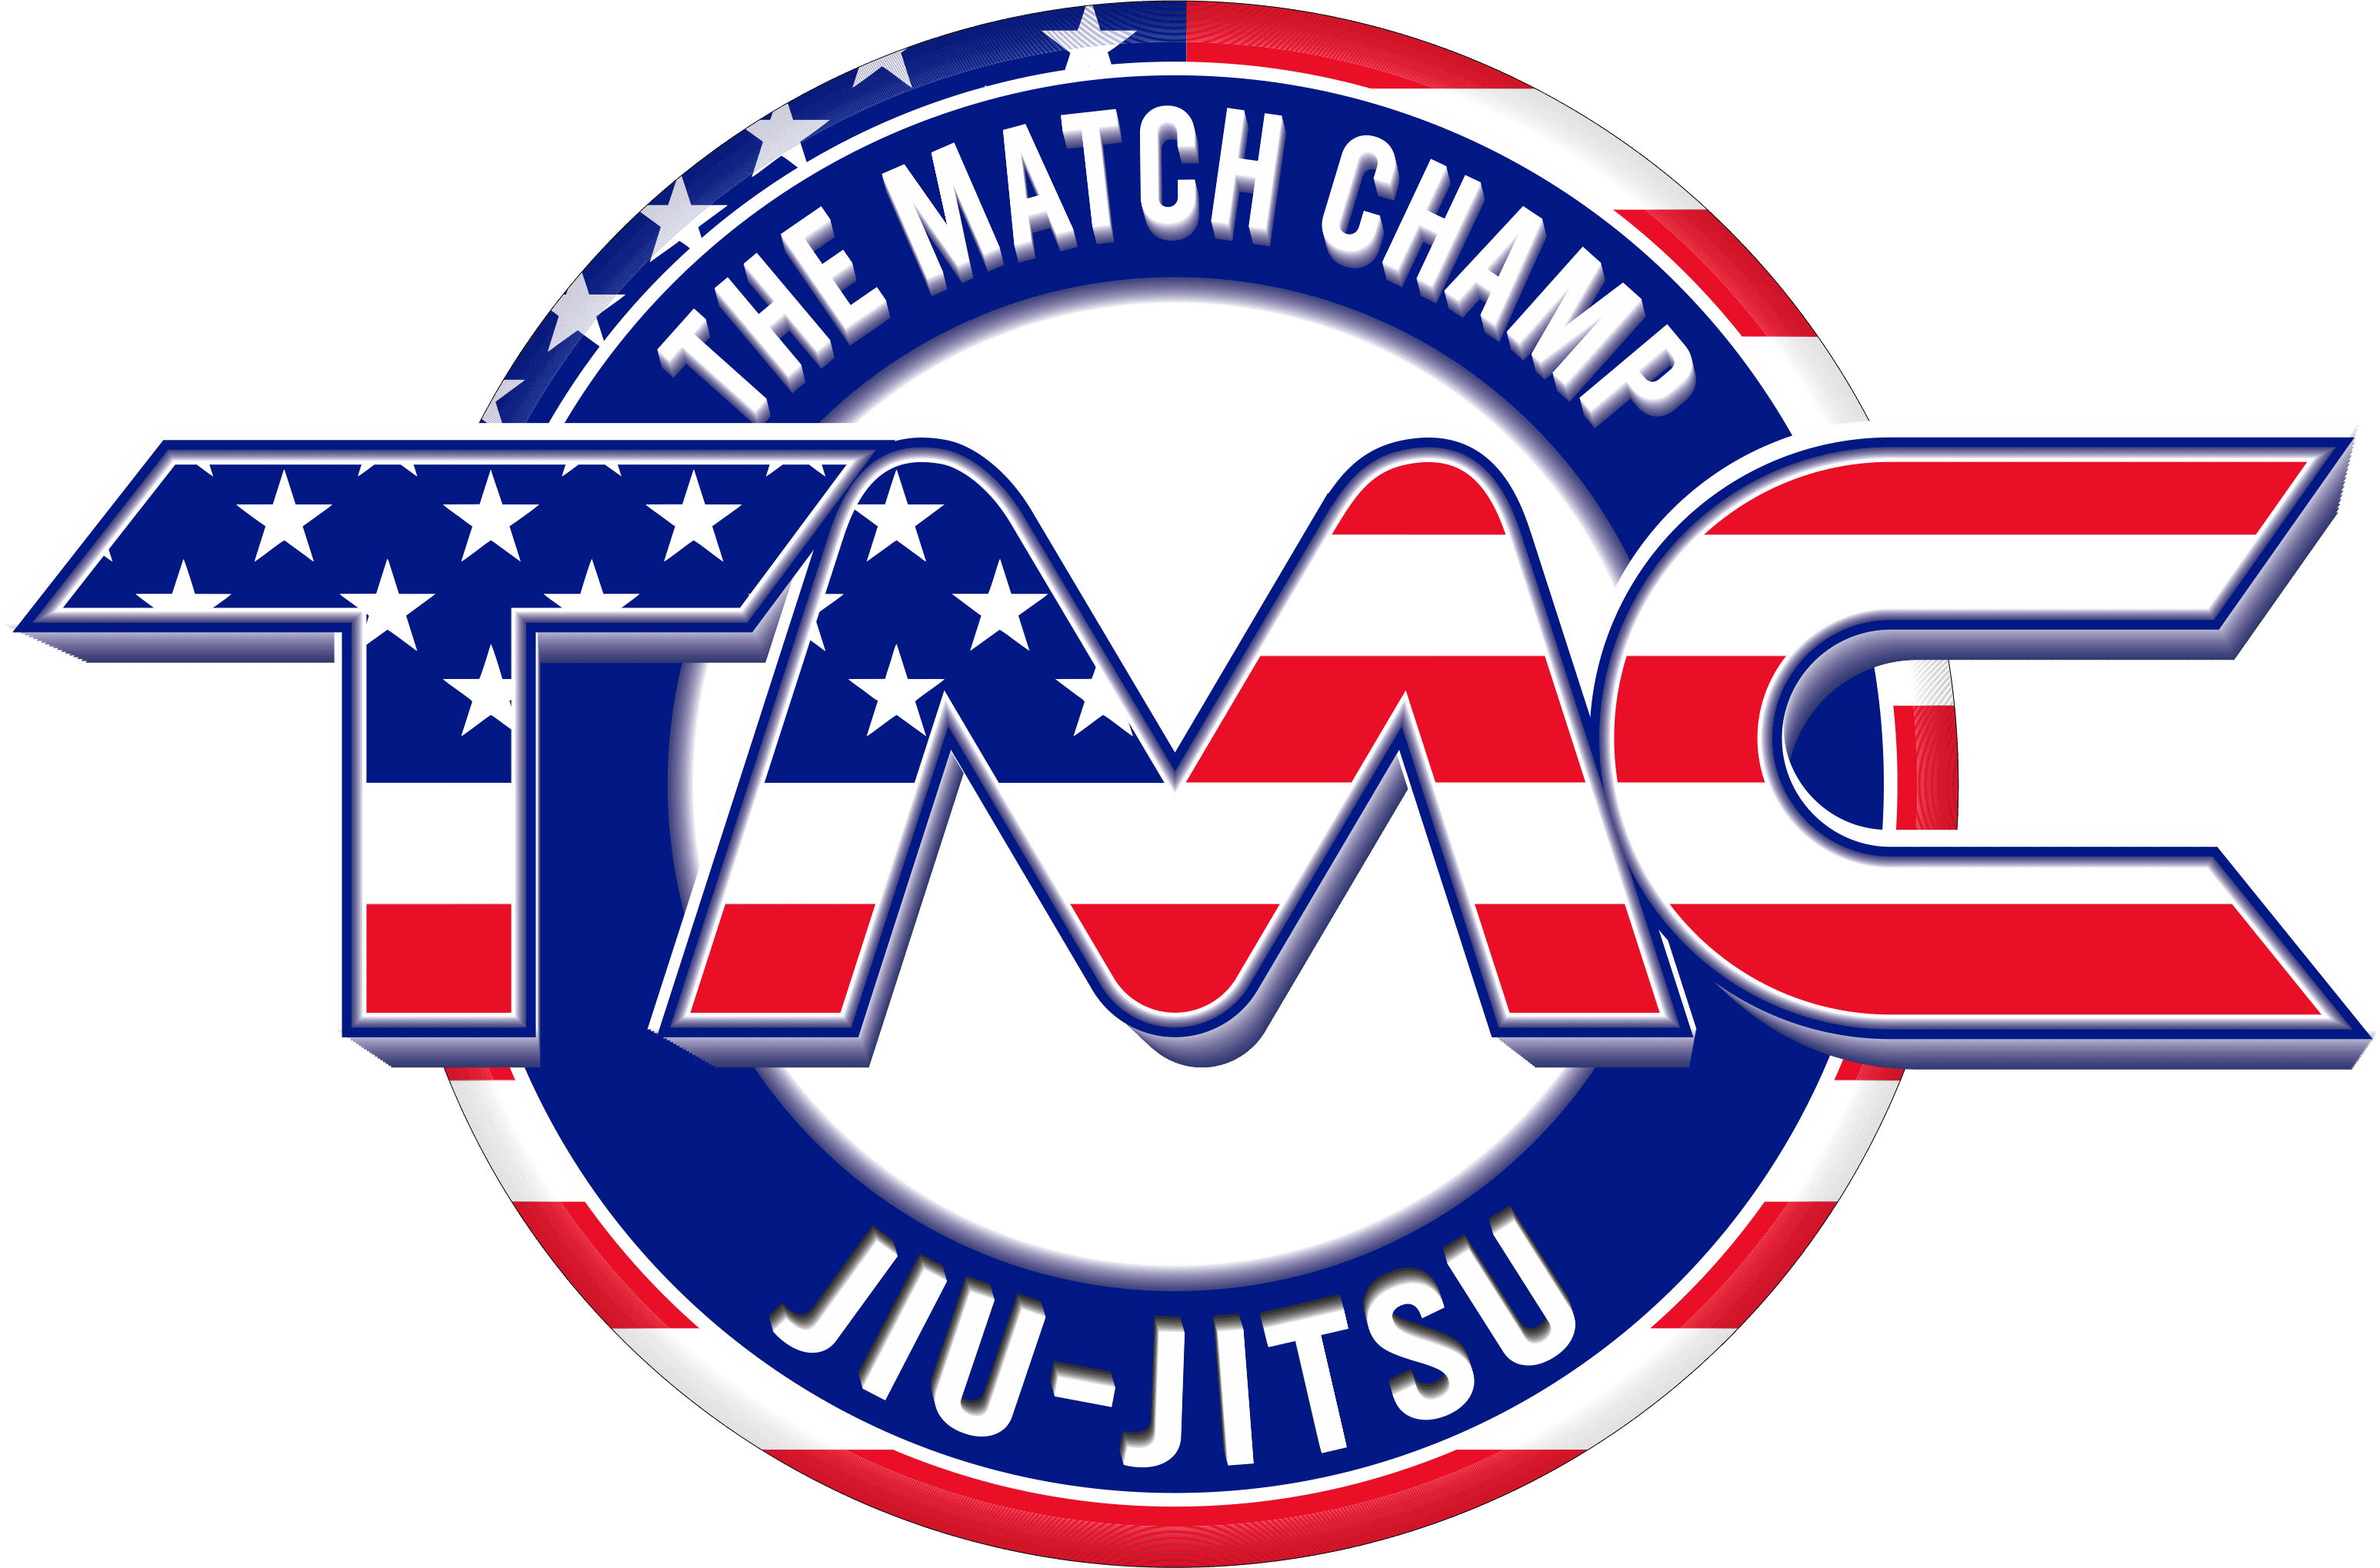 THE MATCH CHAMP USA